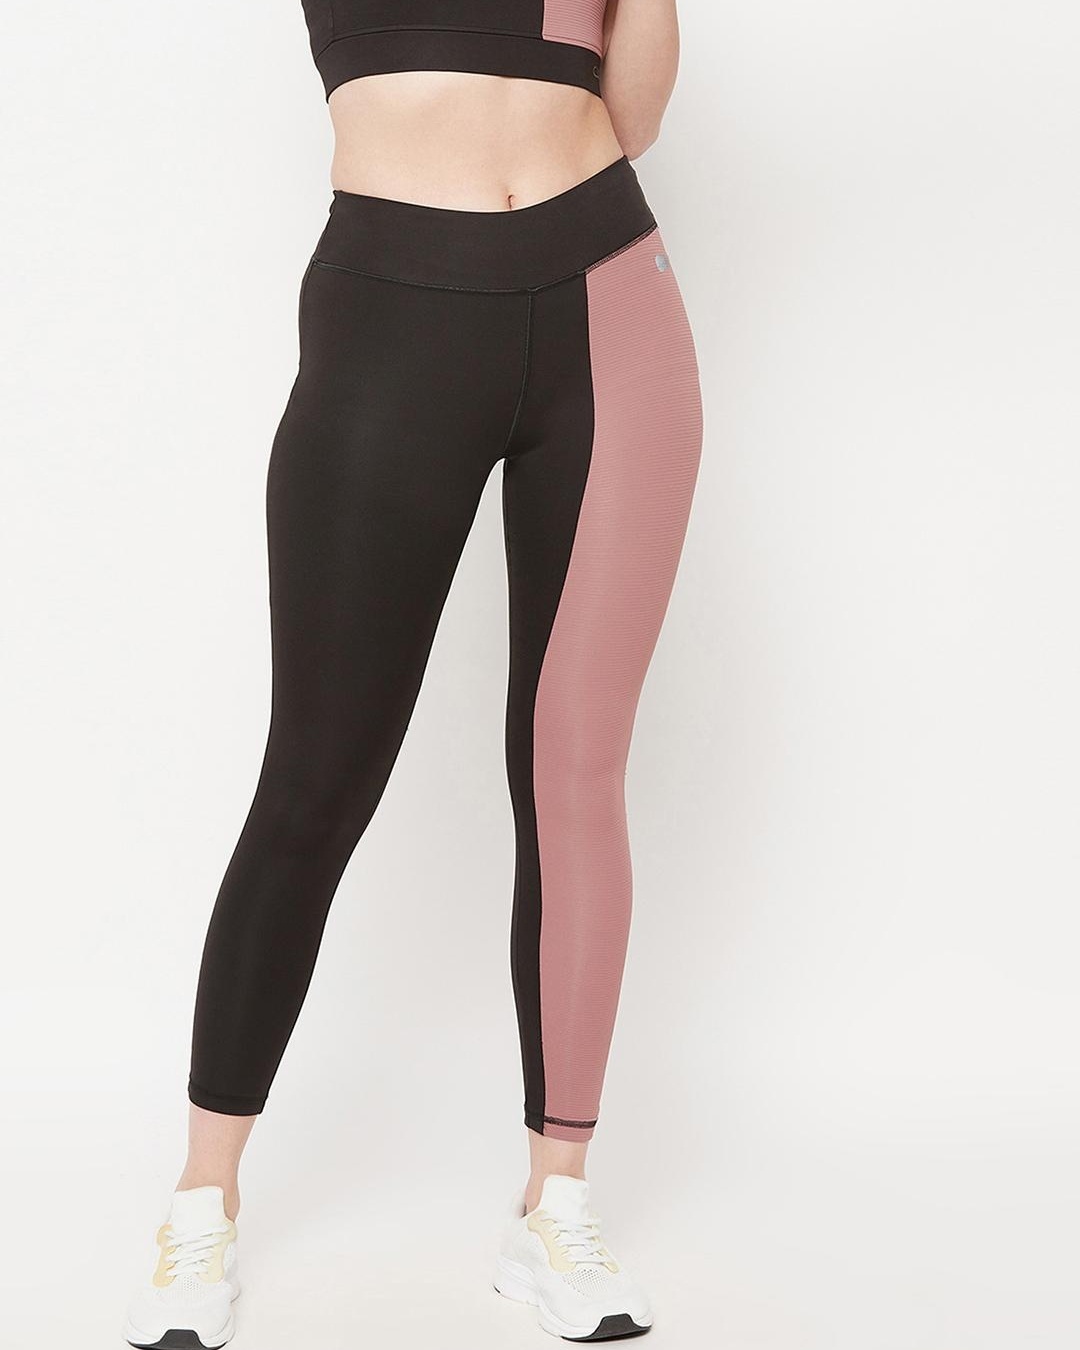 Buy dermawear Women's High Waist Skin Fit Activewear Workout Leggings  (AS-707_Black_Small) at Amazon.in